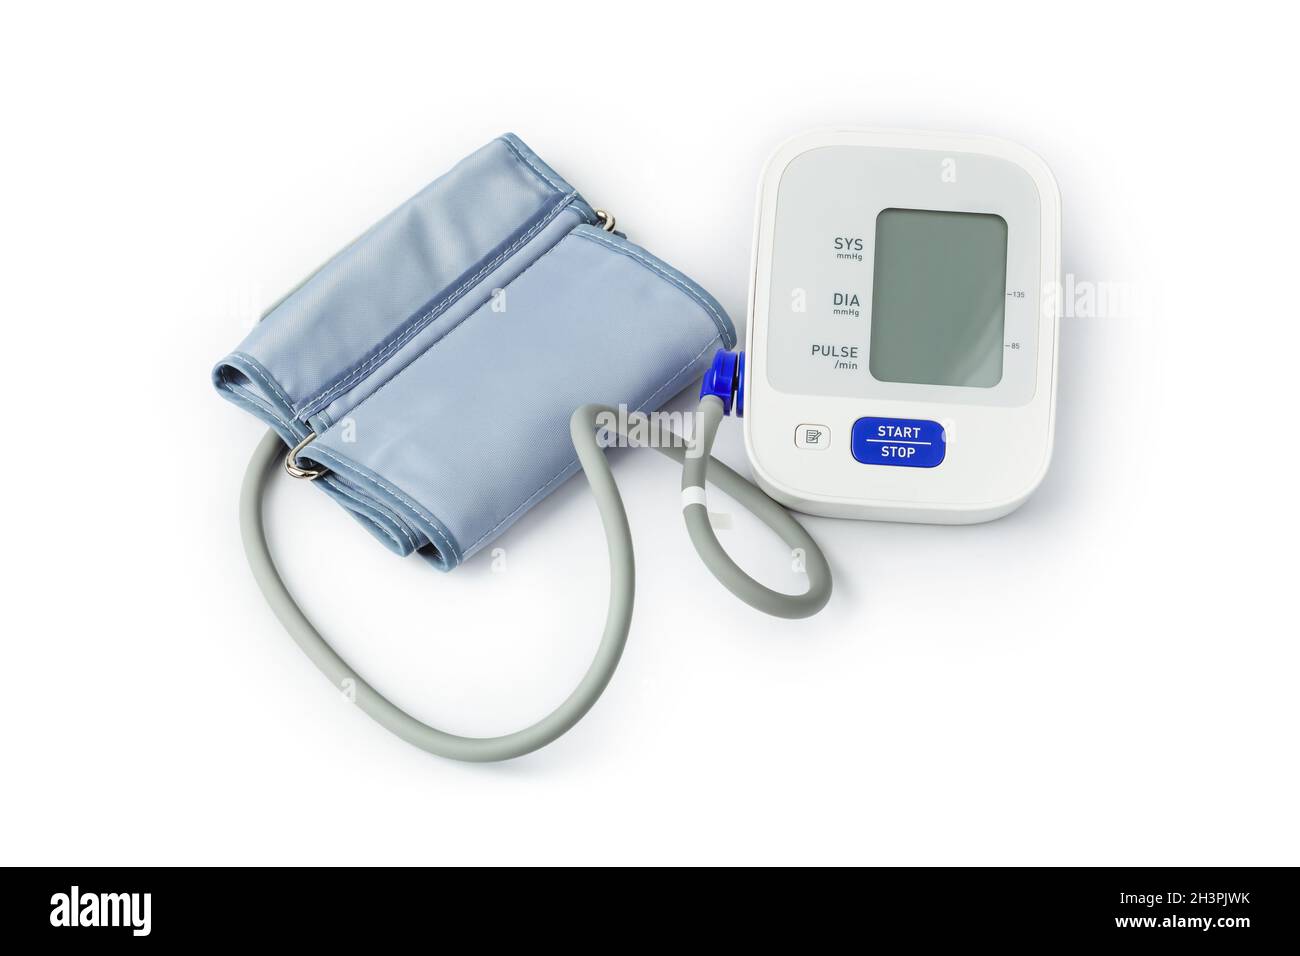 https://c8.alamy.com/comp/2H3PJWK/digital-blood-pressure-monitor-2H3PJWK.jpg